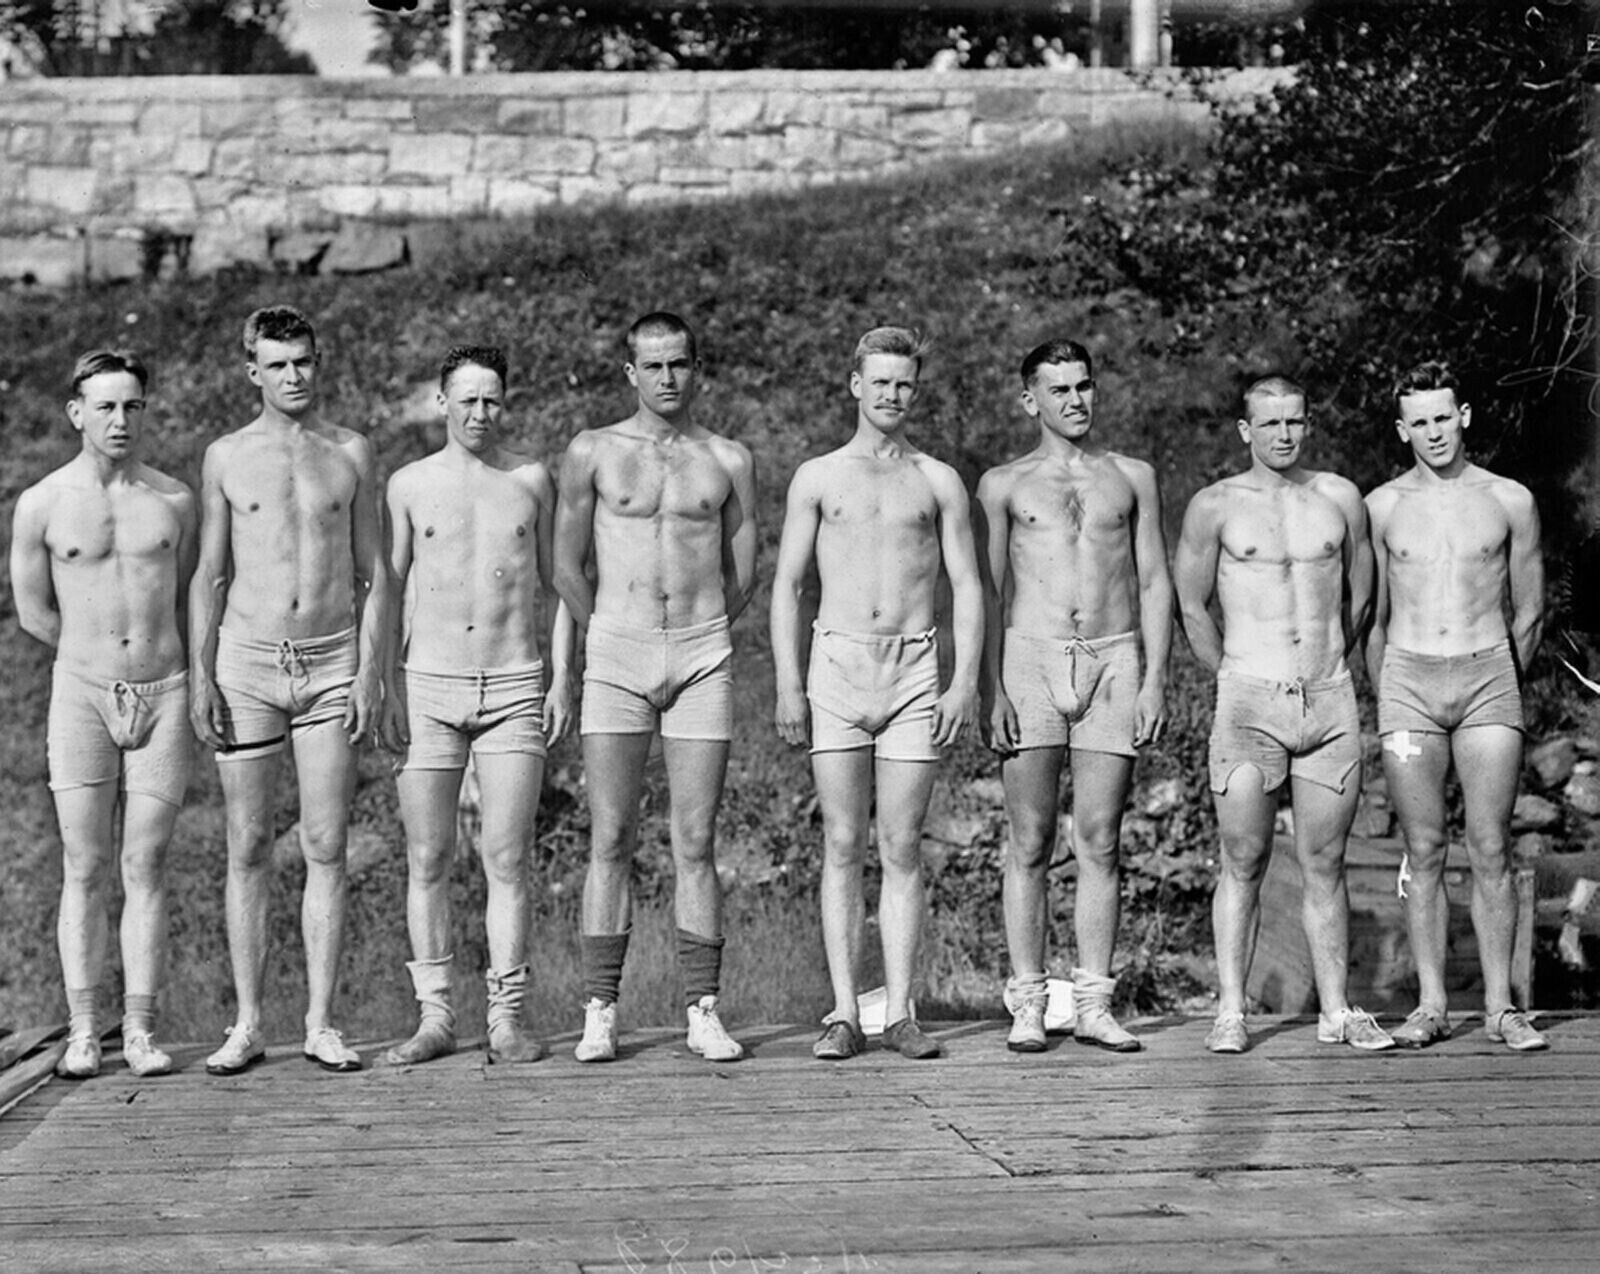 1911 YALE VARSITY ROWING TEAM Crew Classic Retro Vintage Picture Photo Print 4x6